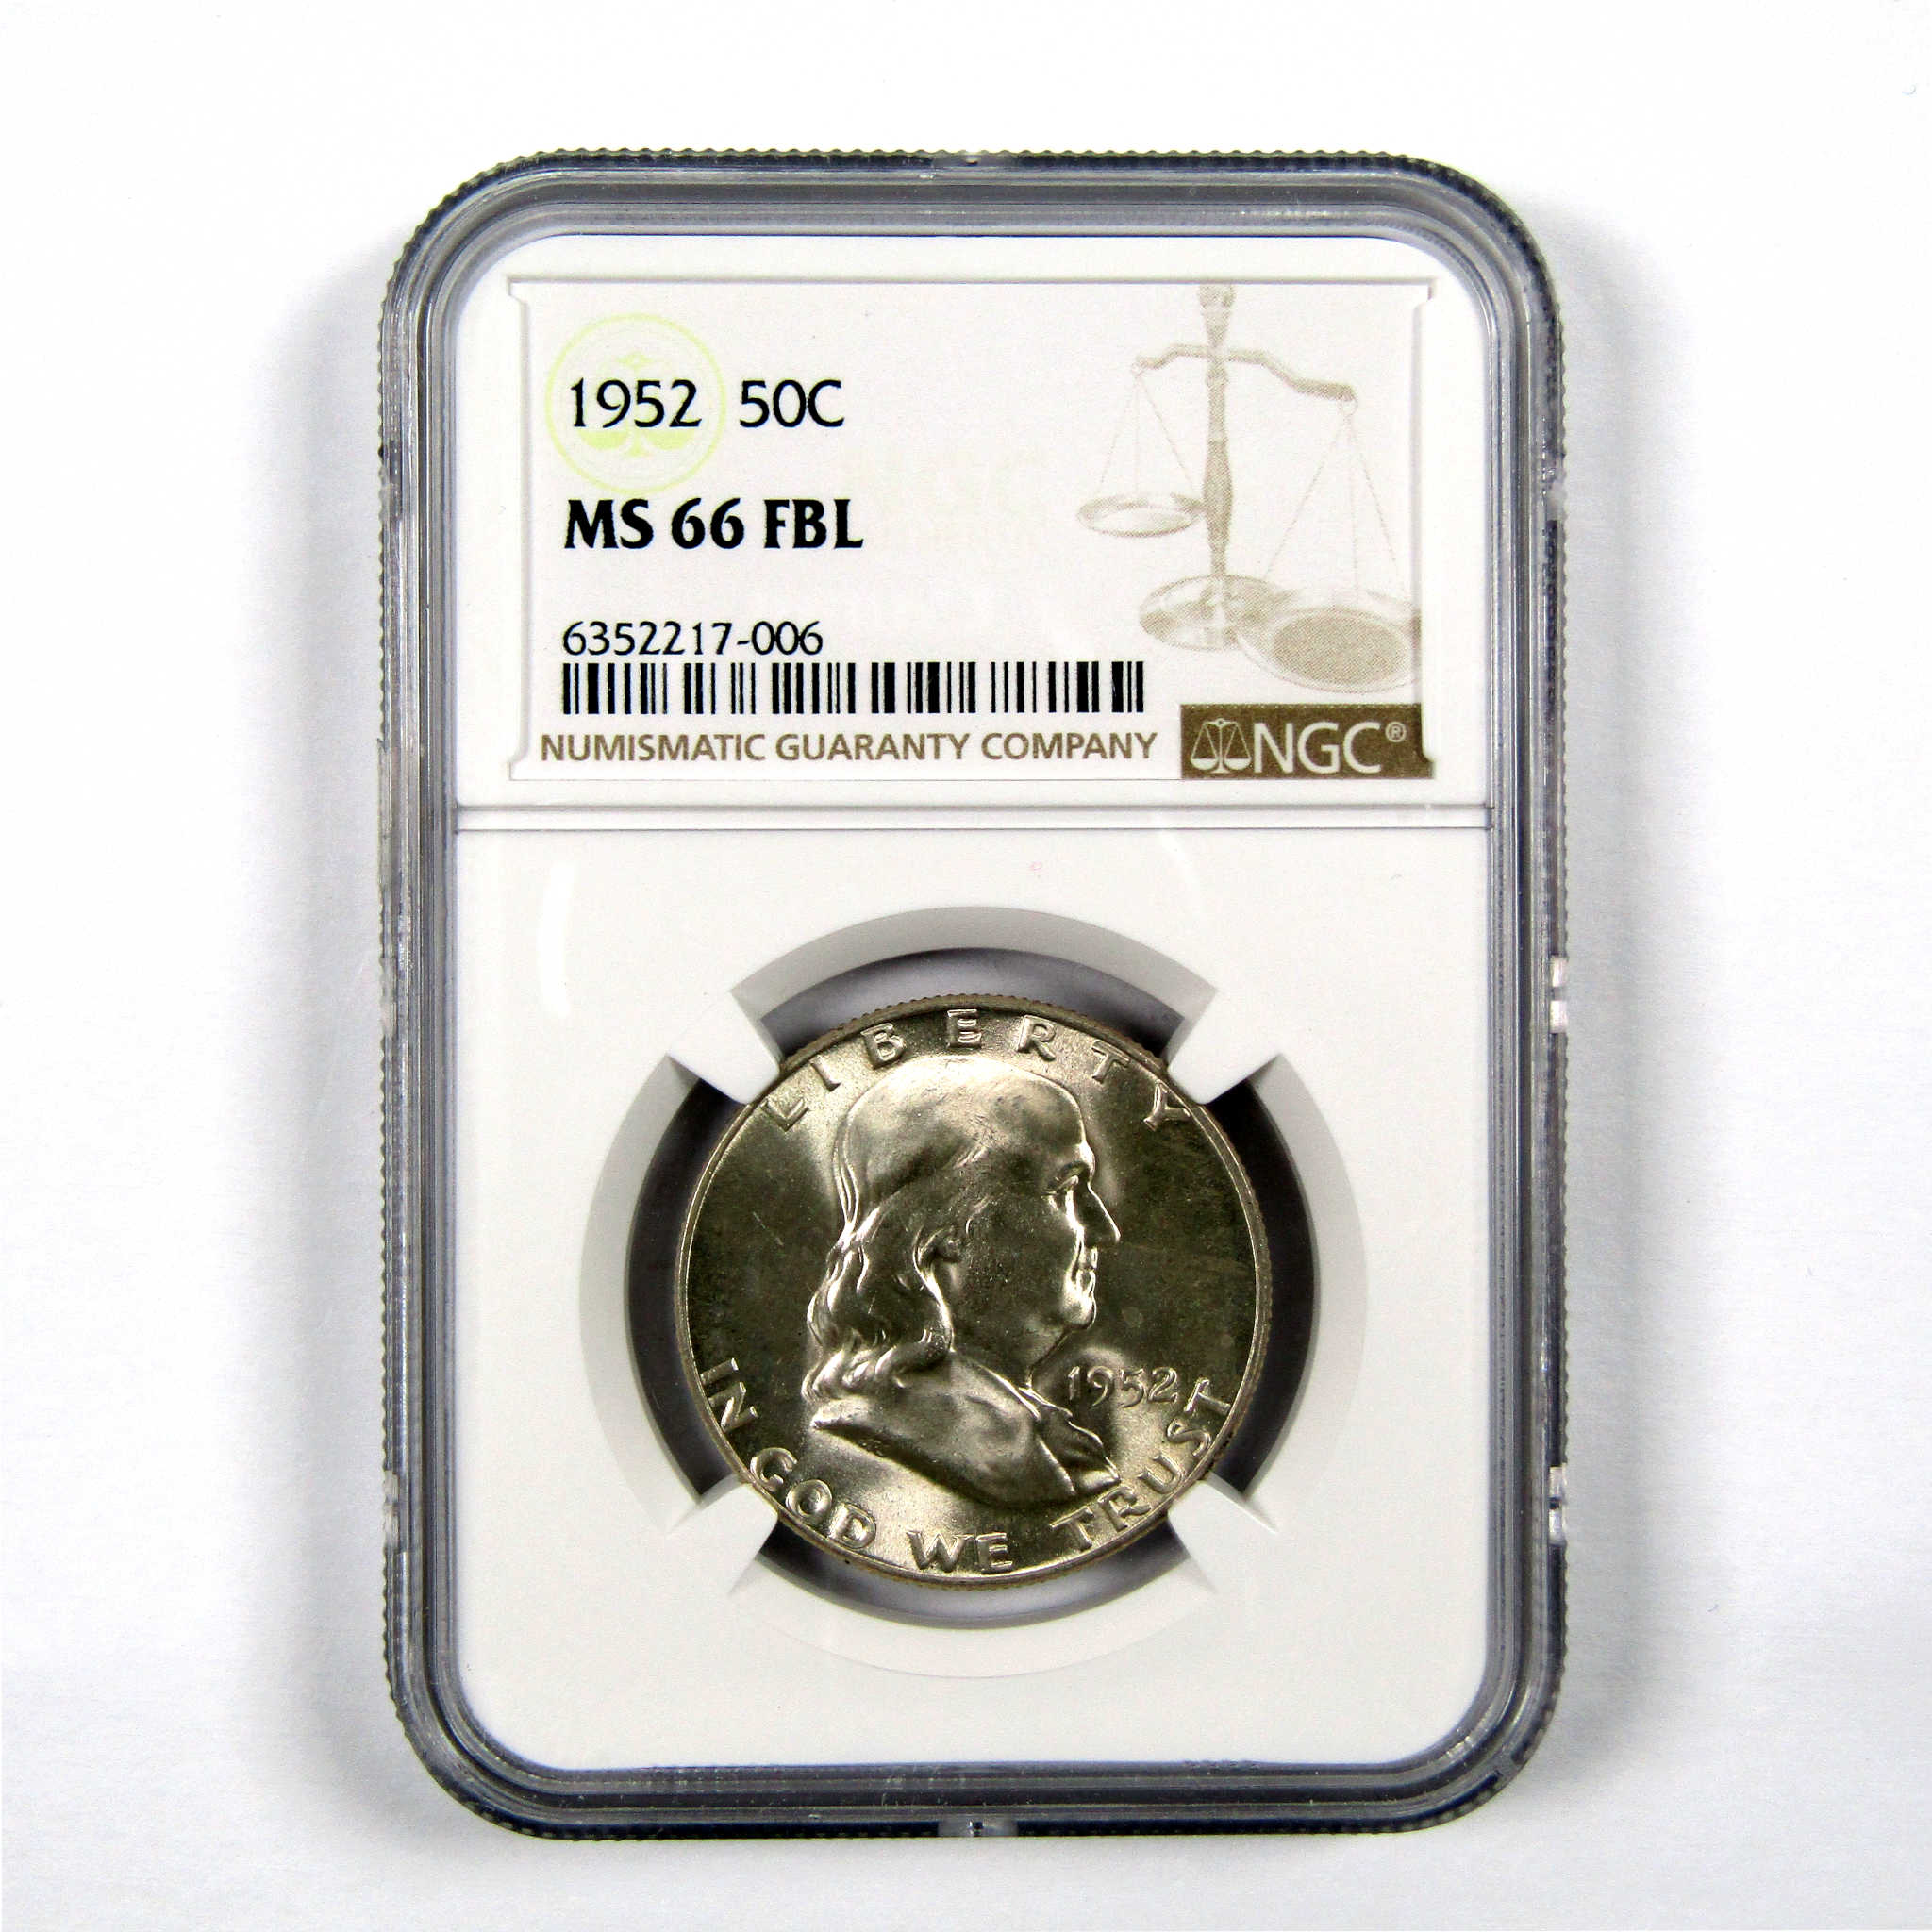 1952 Franklin Half Dollar MS 66 FBL NGC 90% Silver 50c Unc SKU:I9280